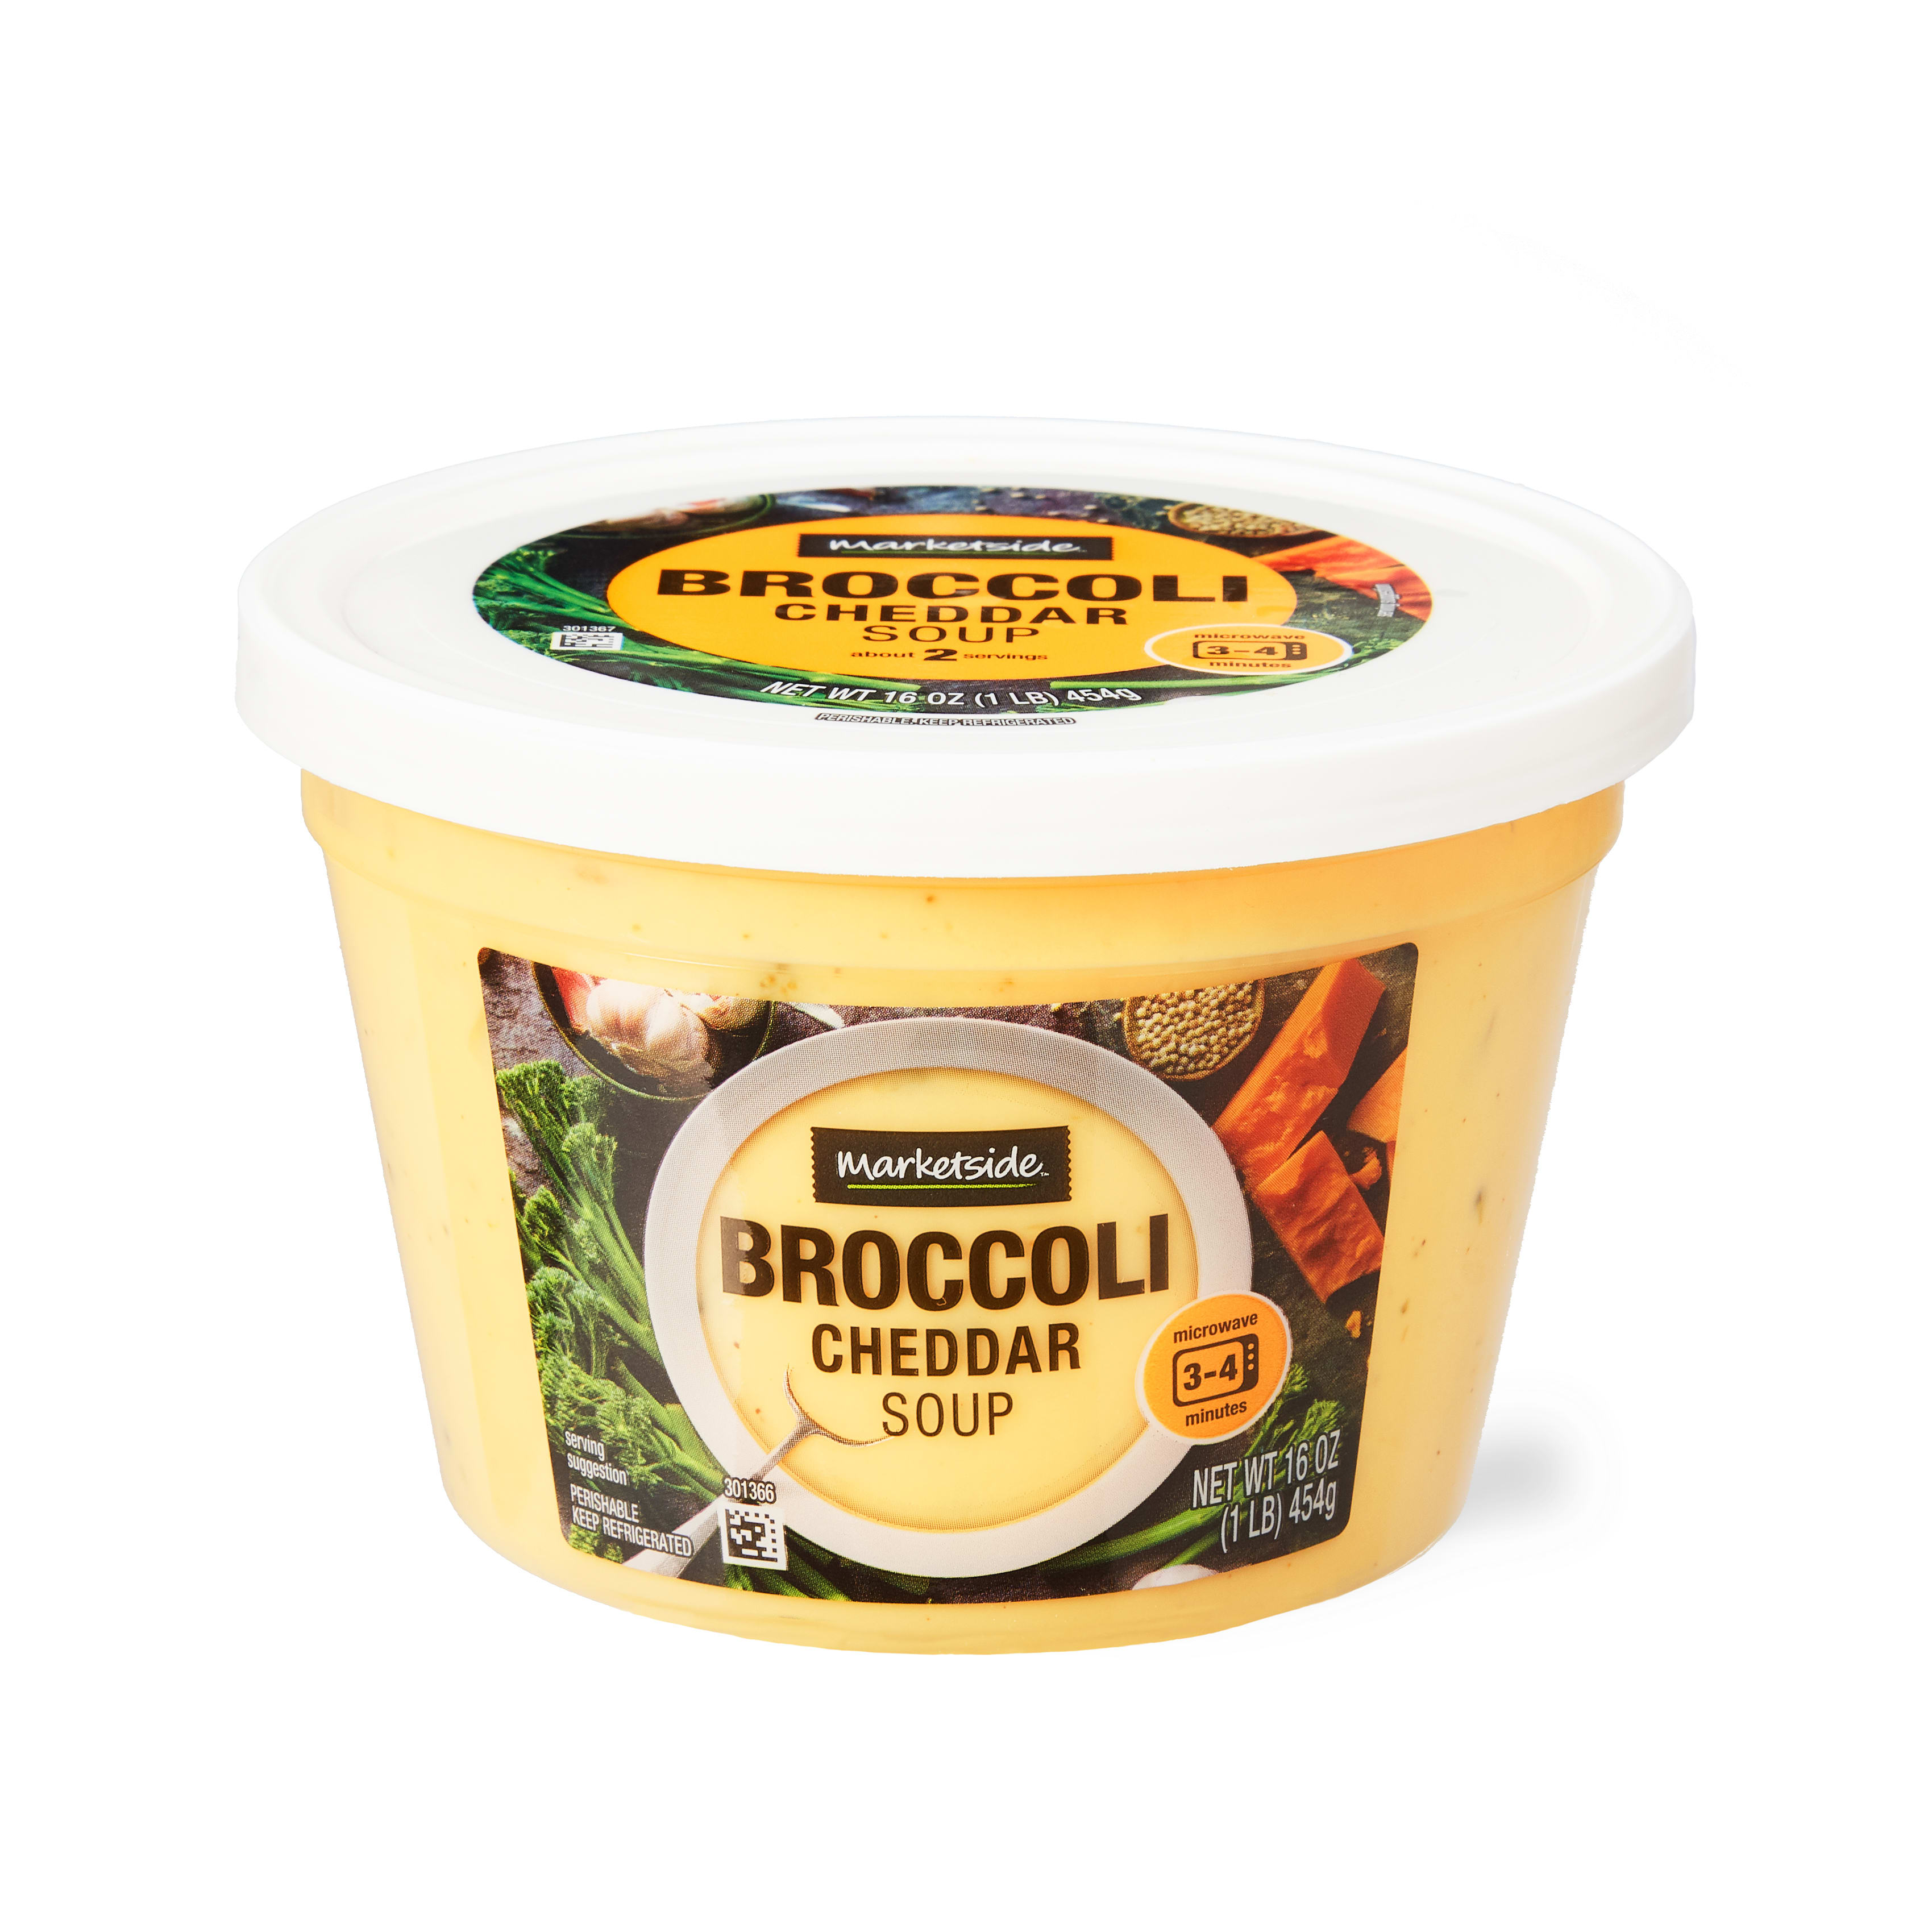 Marketside Broccoli & Cheddar Cheese Soup - Fresh Deli Soup, 16 oz